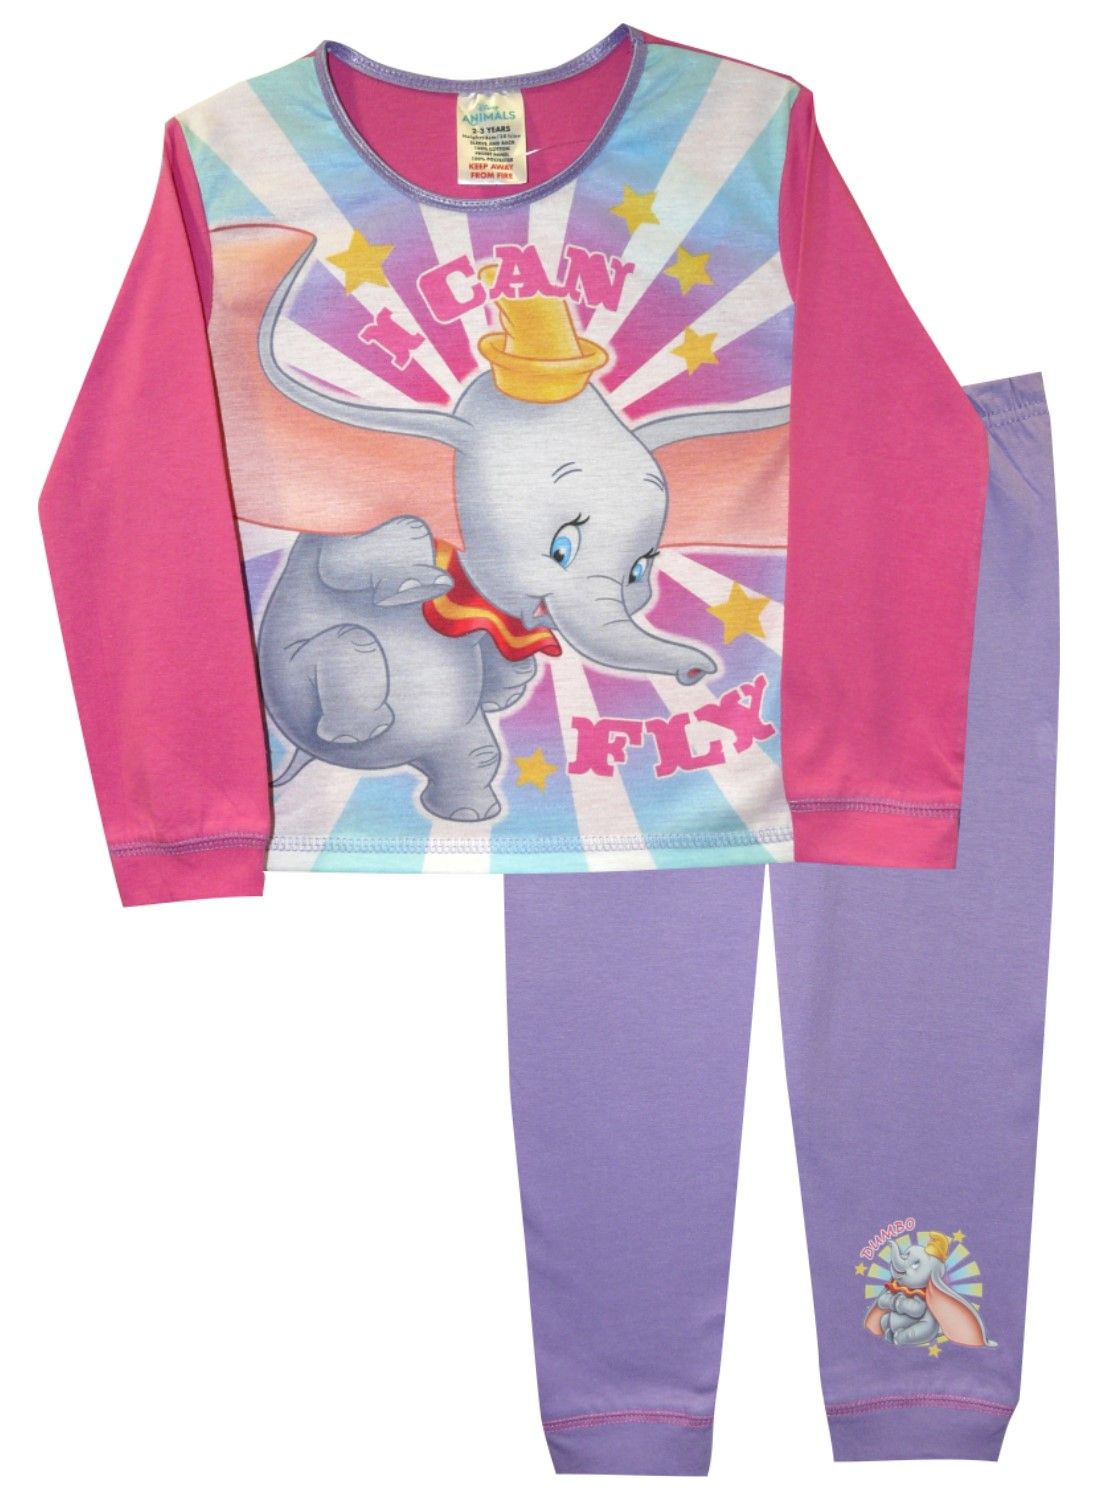 Dumbo "I can Fly" Girl's Pyjamas